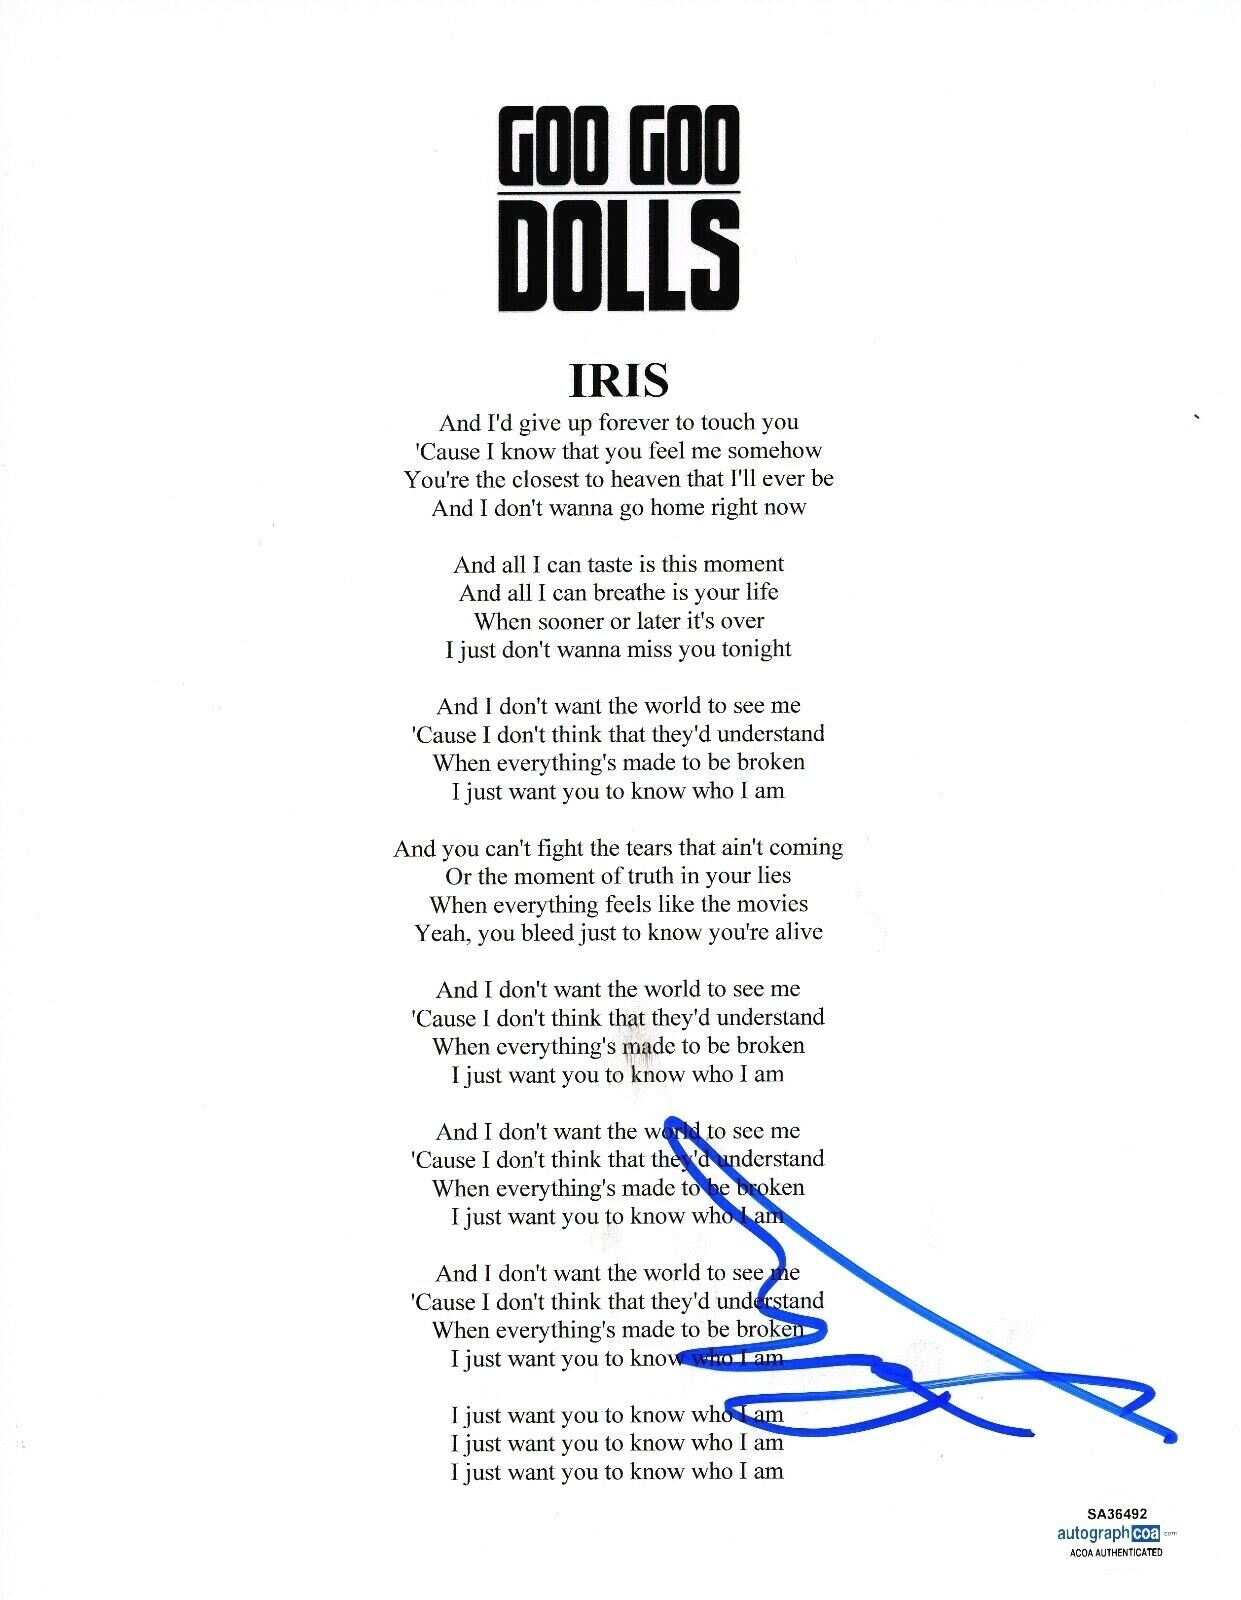 John Rzeznik Signed Autographed Goo Goo Dolls IRIS Song Lyric Sheet COA 